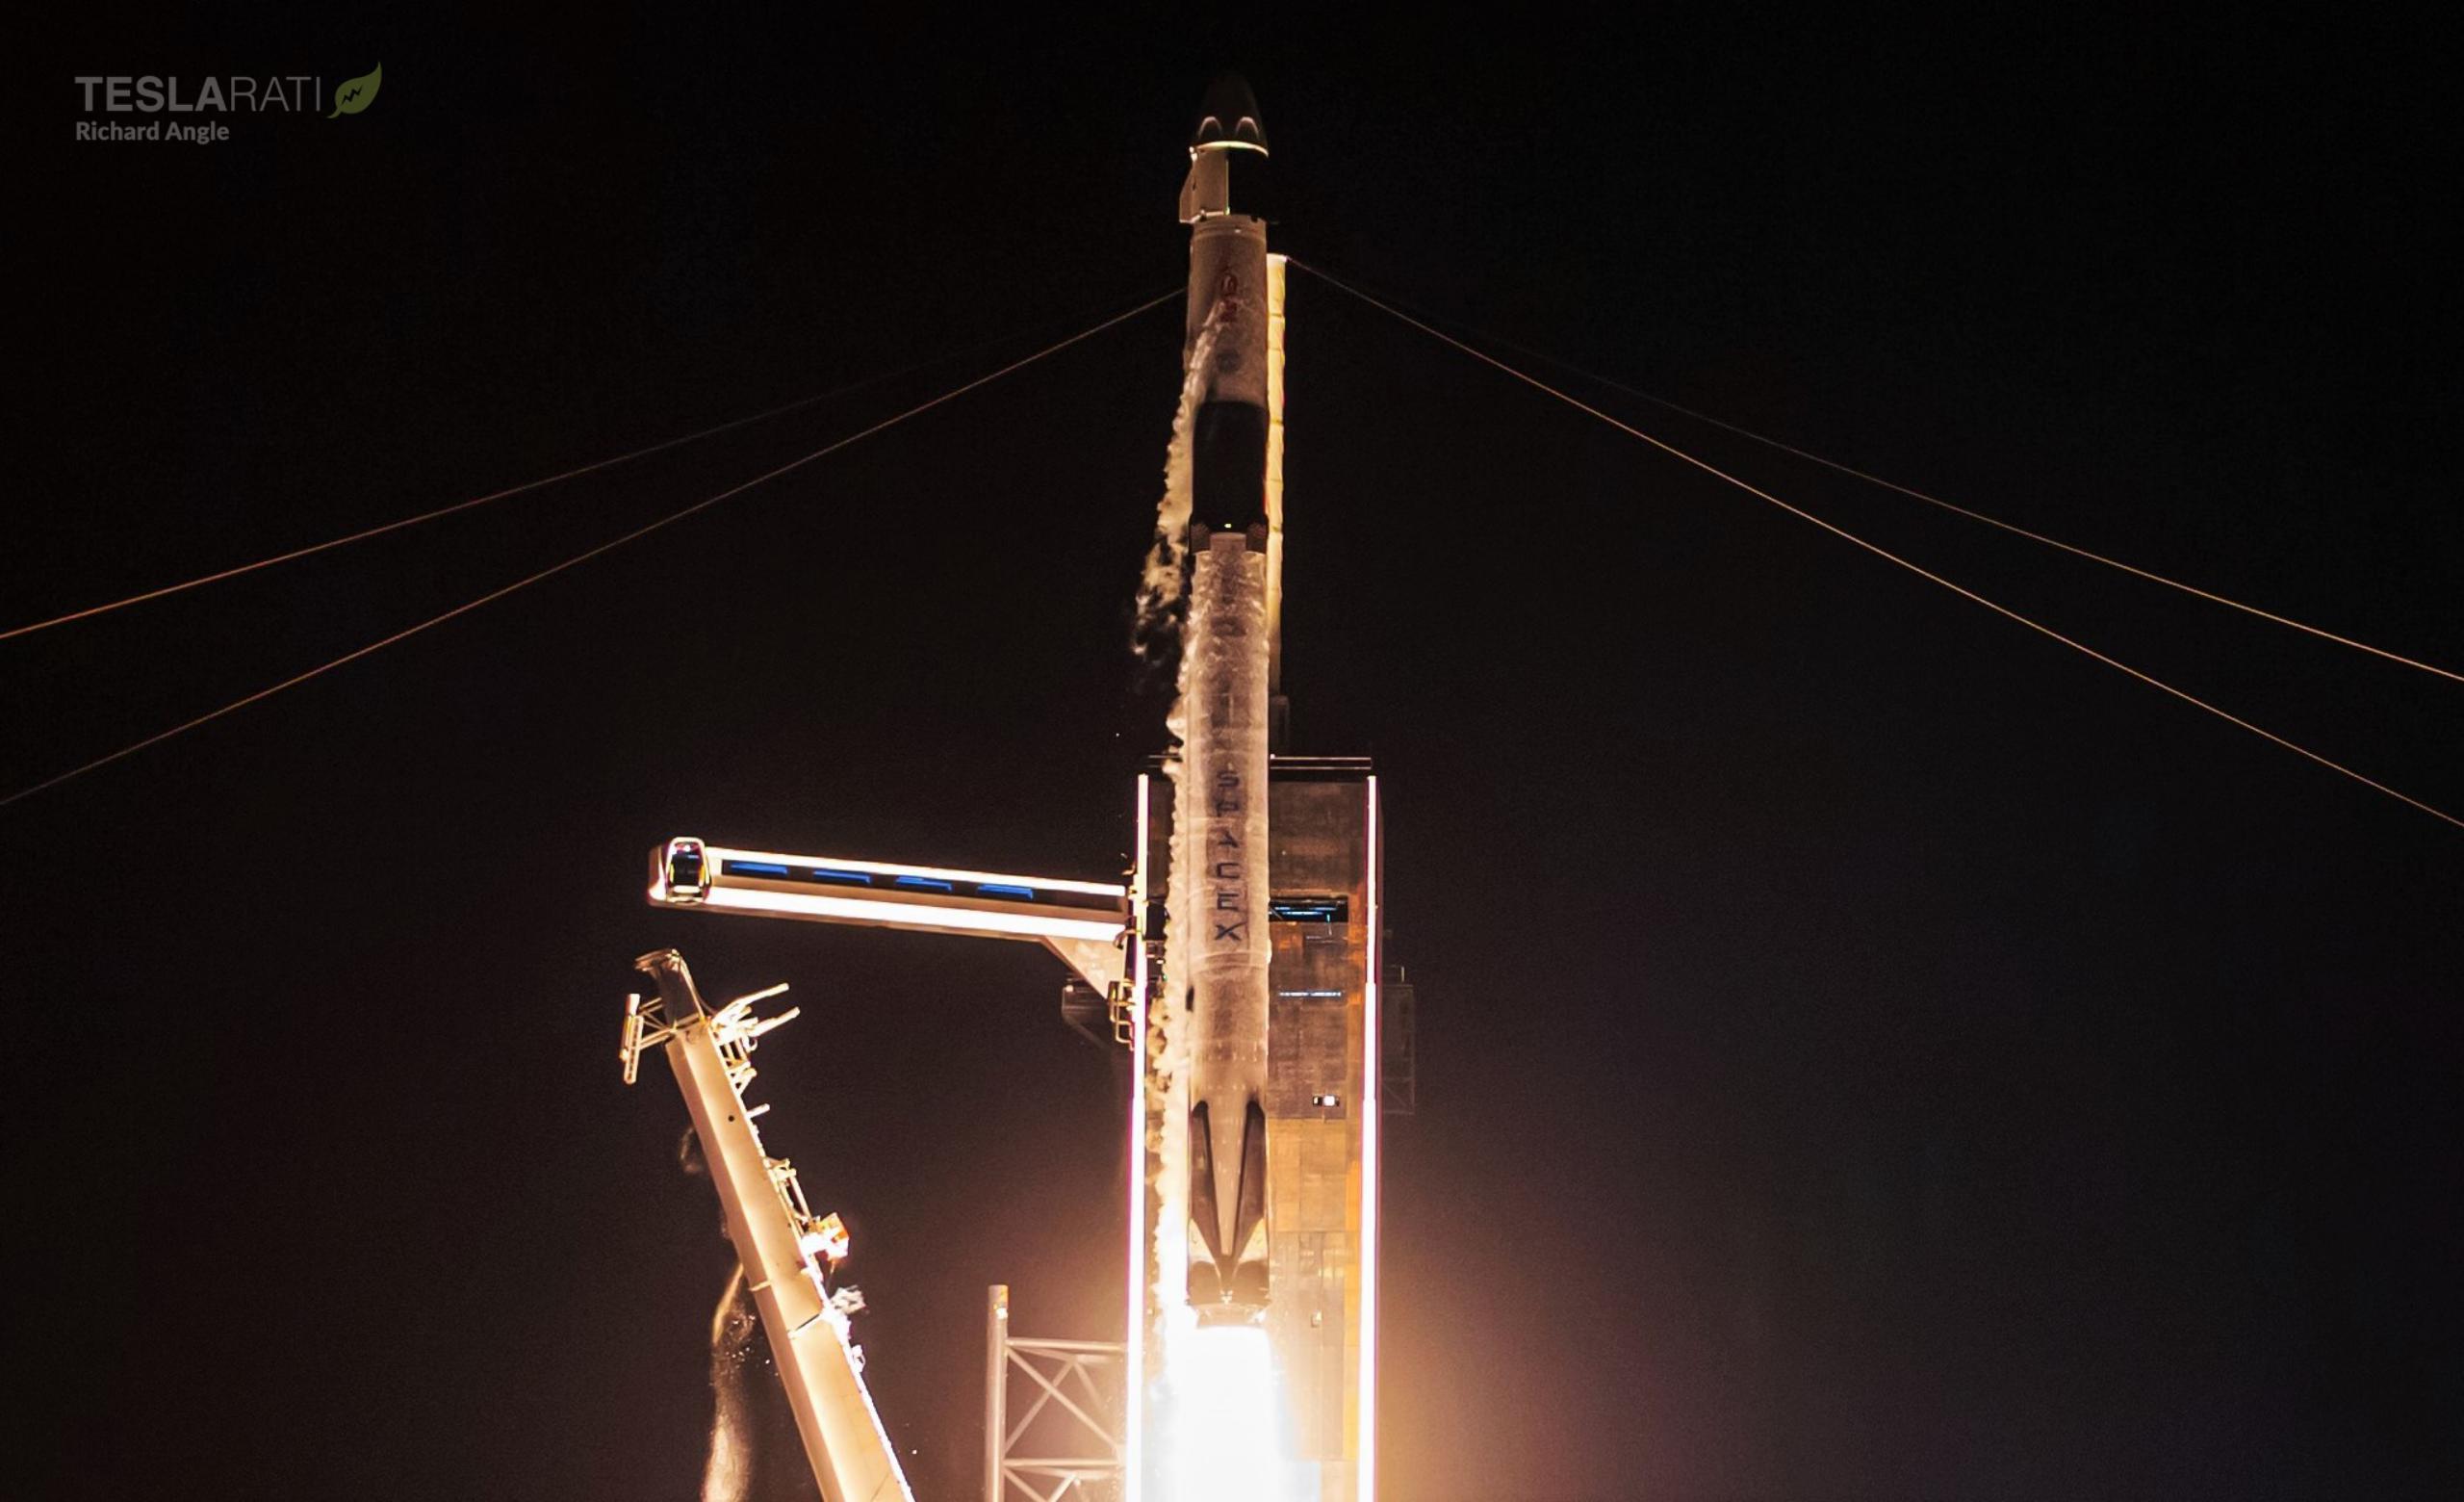 Crew-2 Crew Dragon C206 Falcon 9 B1061 39A 042321 (Richard Angle) launch 2 edit (c)